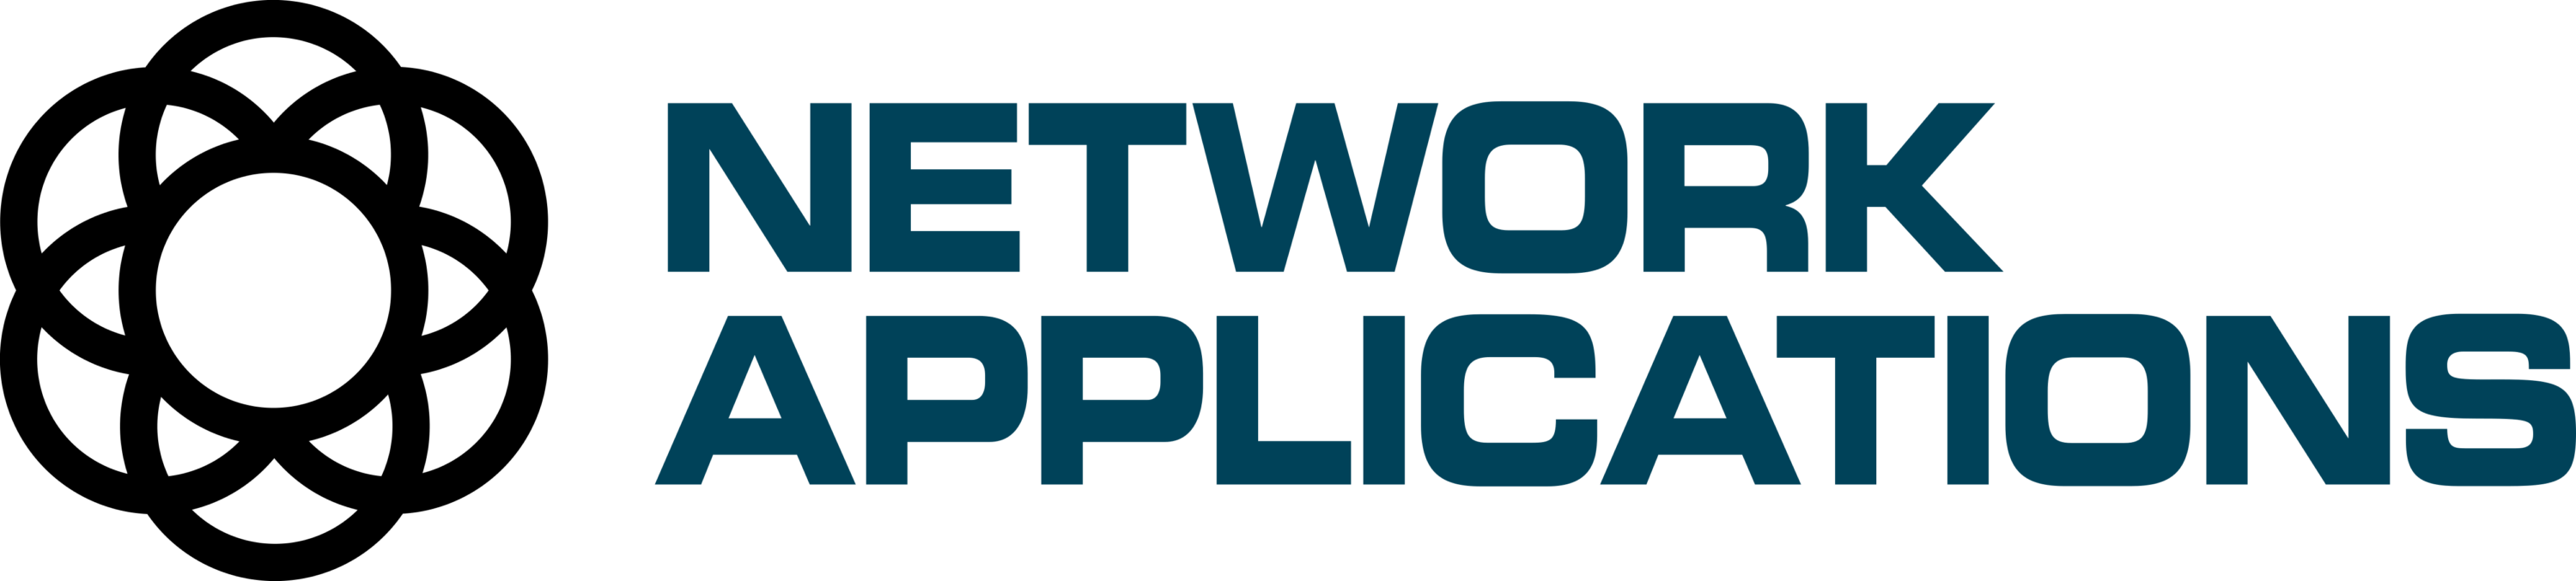 Network Applications Logo